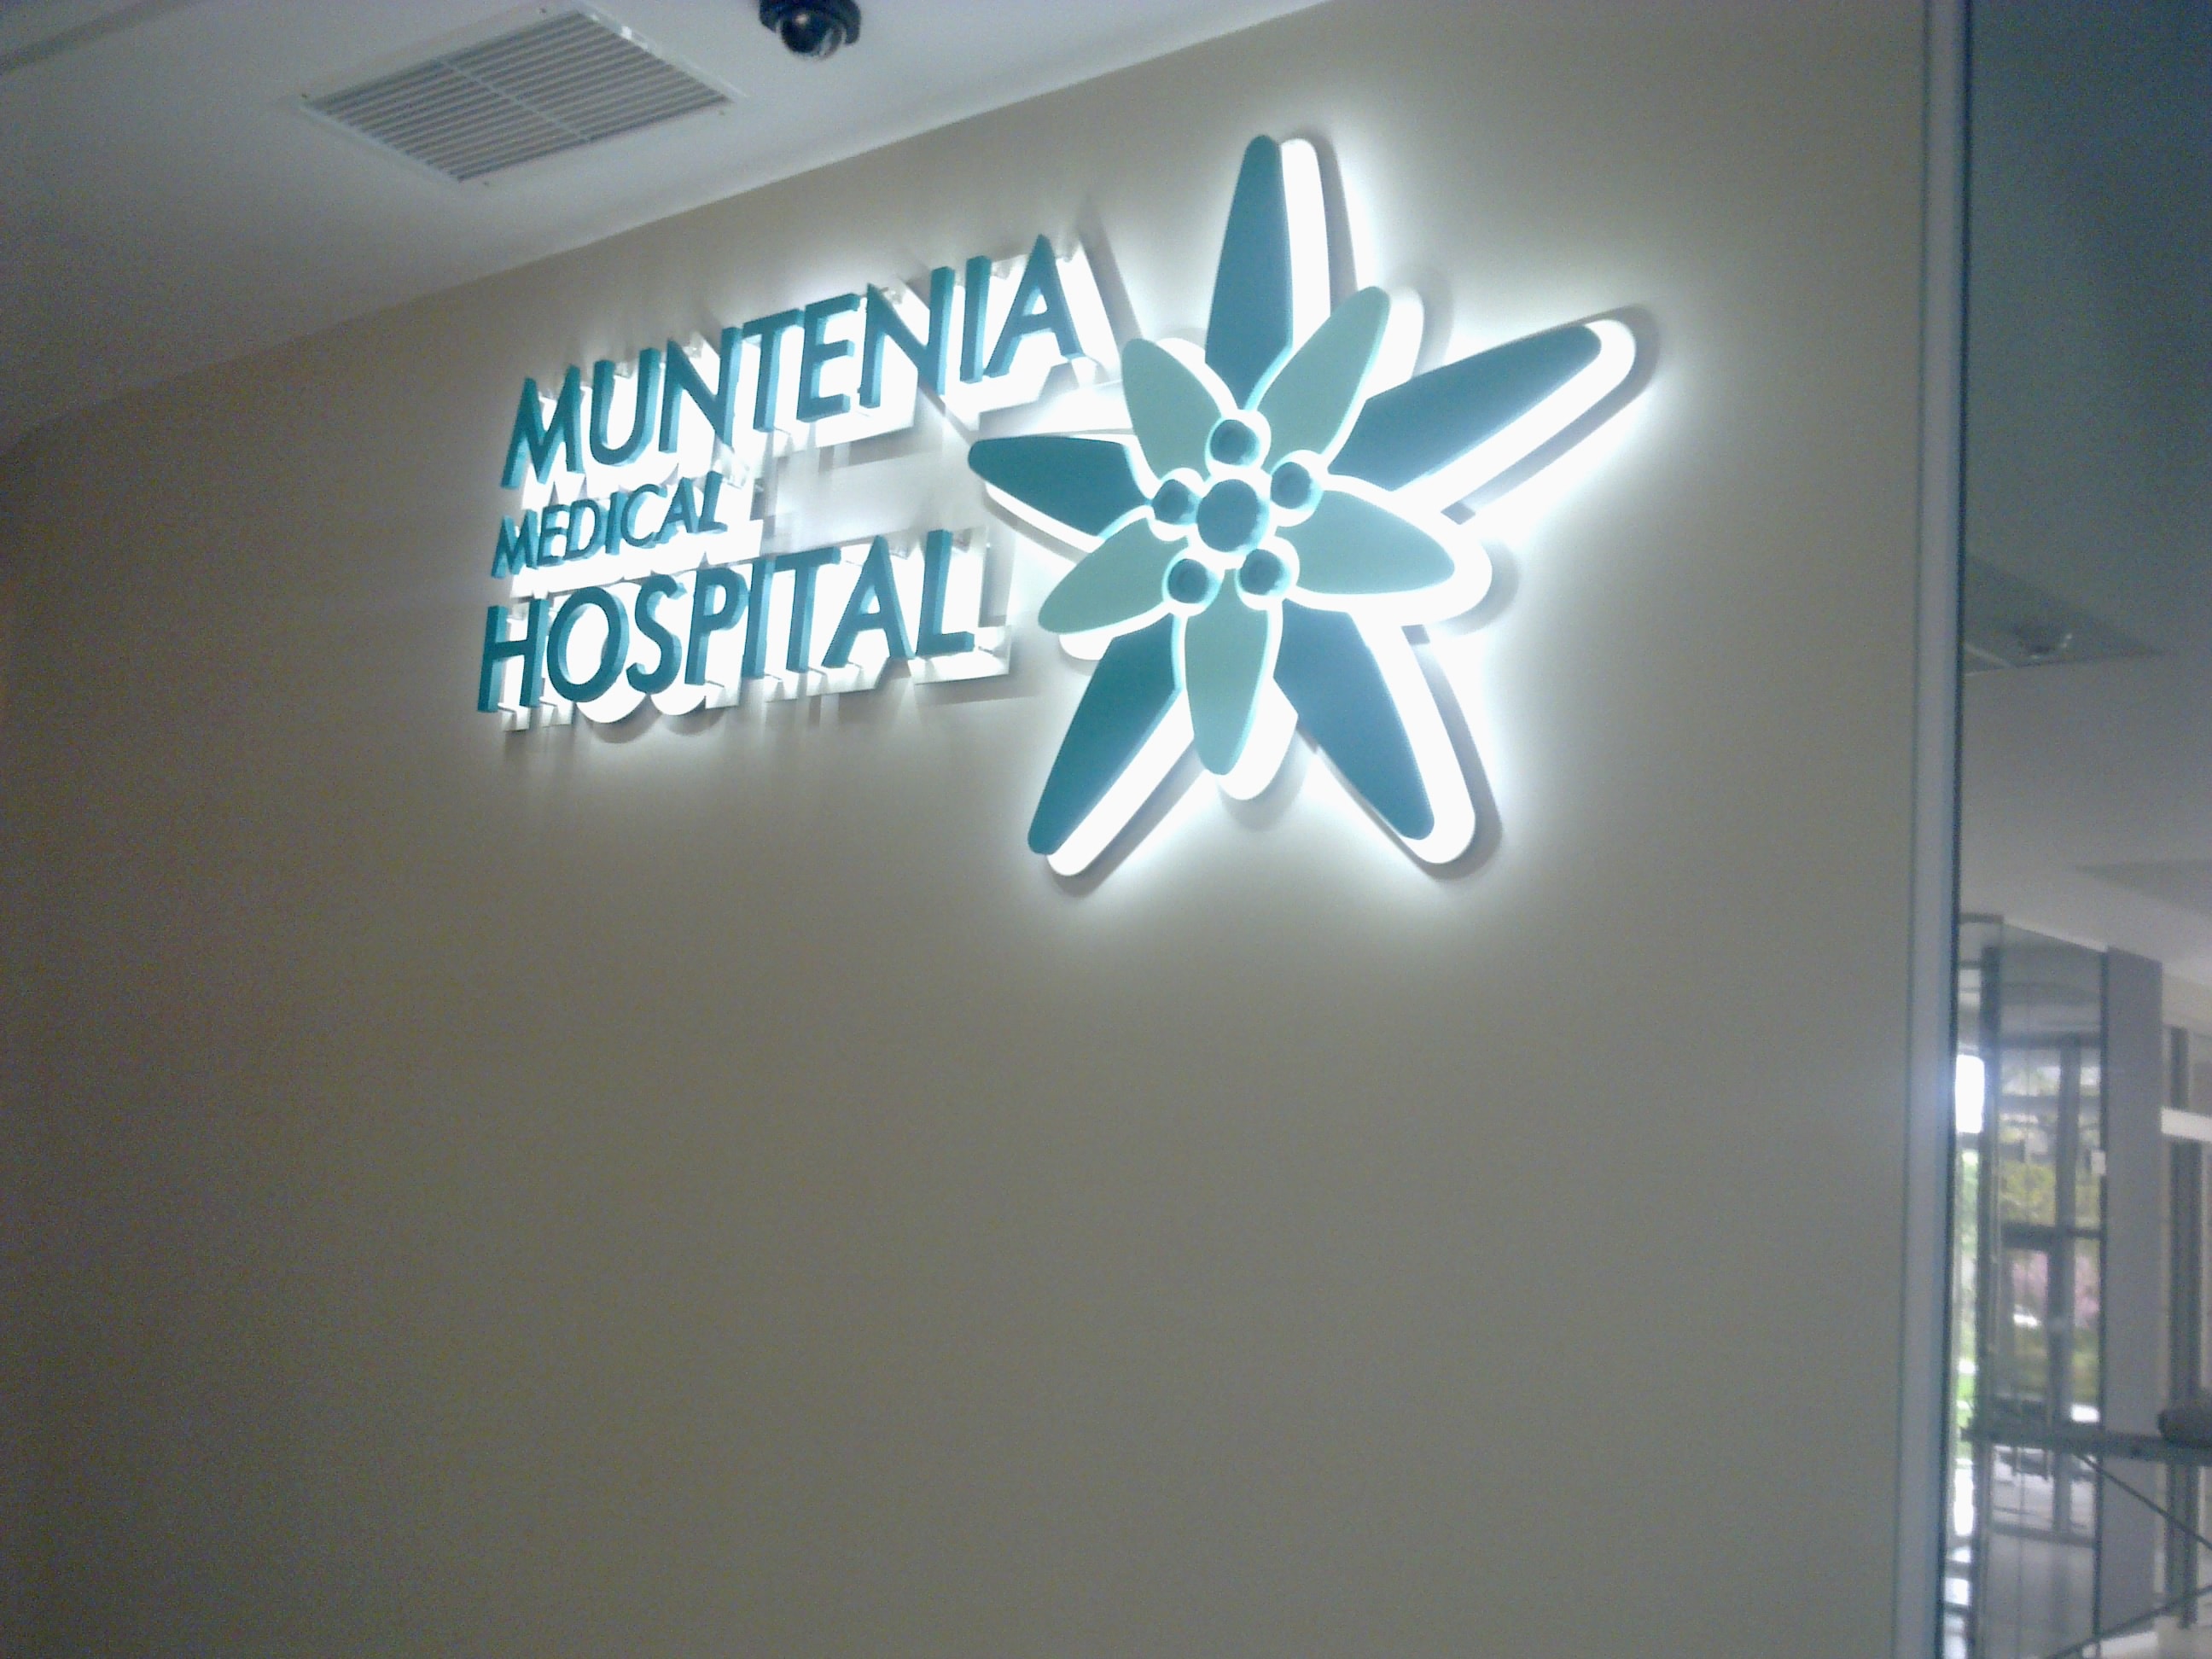 Signalistica de interior la Spitalul Muntenia Medical Hospital Pitesti. Litere independente cu iluminare tip halou